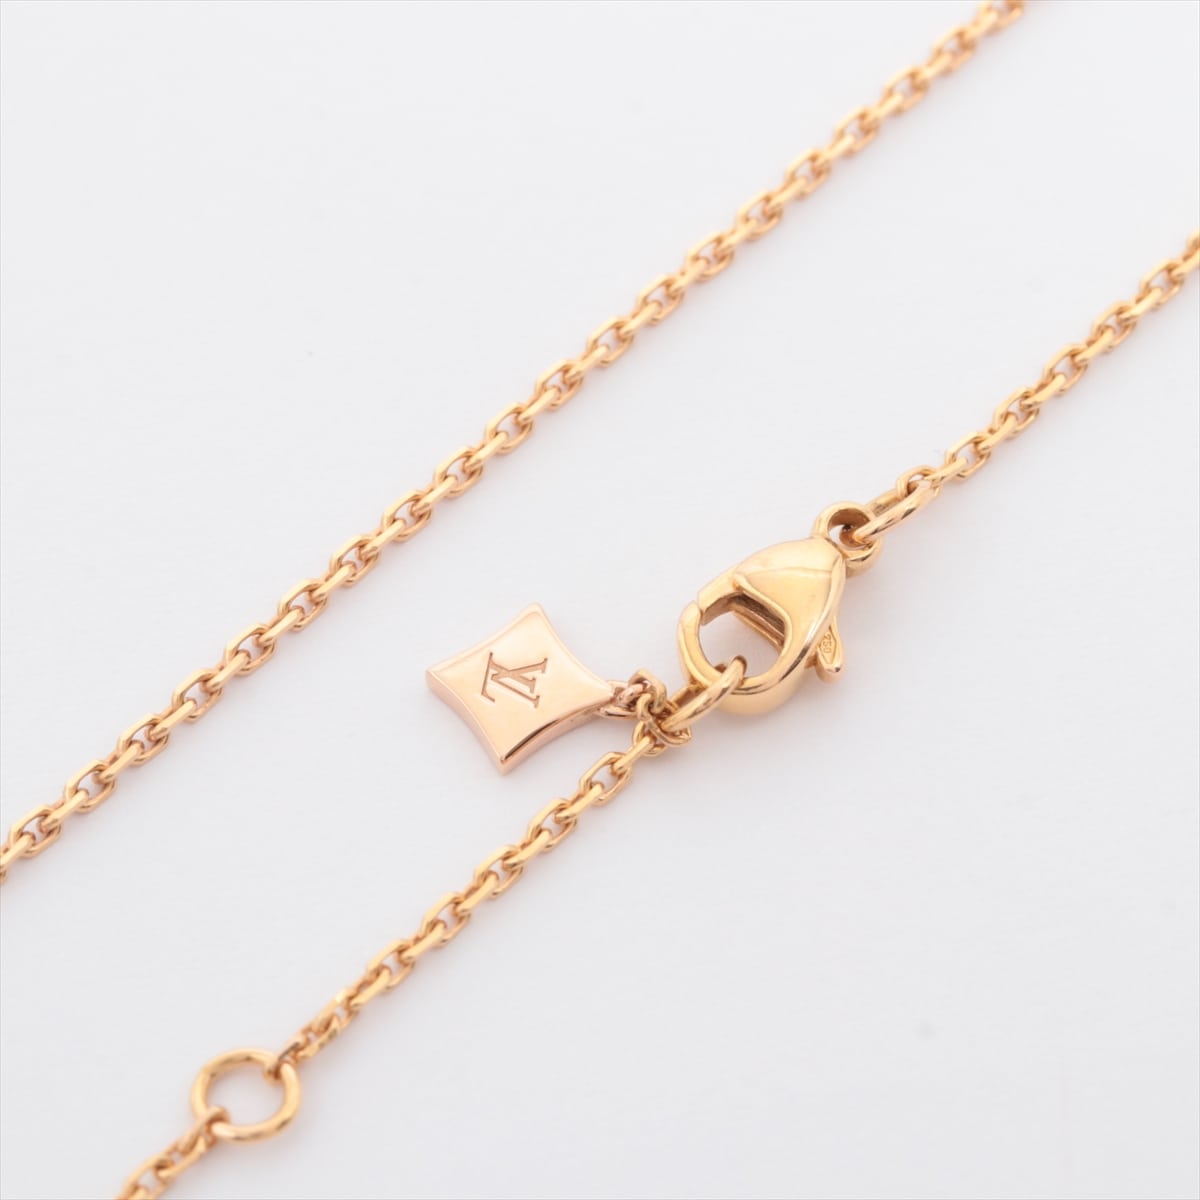 Louis Vuitton Pandantif Star Blossom diamond Necklace 750(PG) 5.2g fastener YG